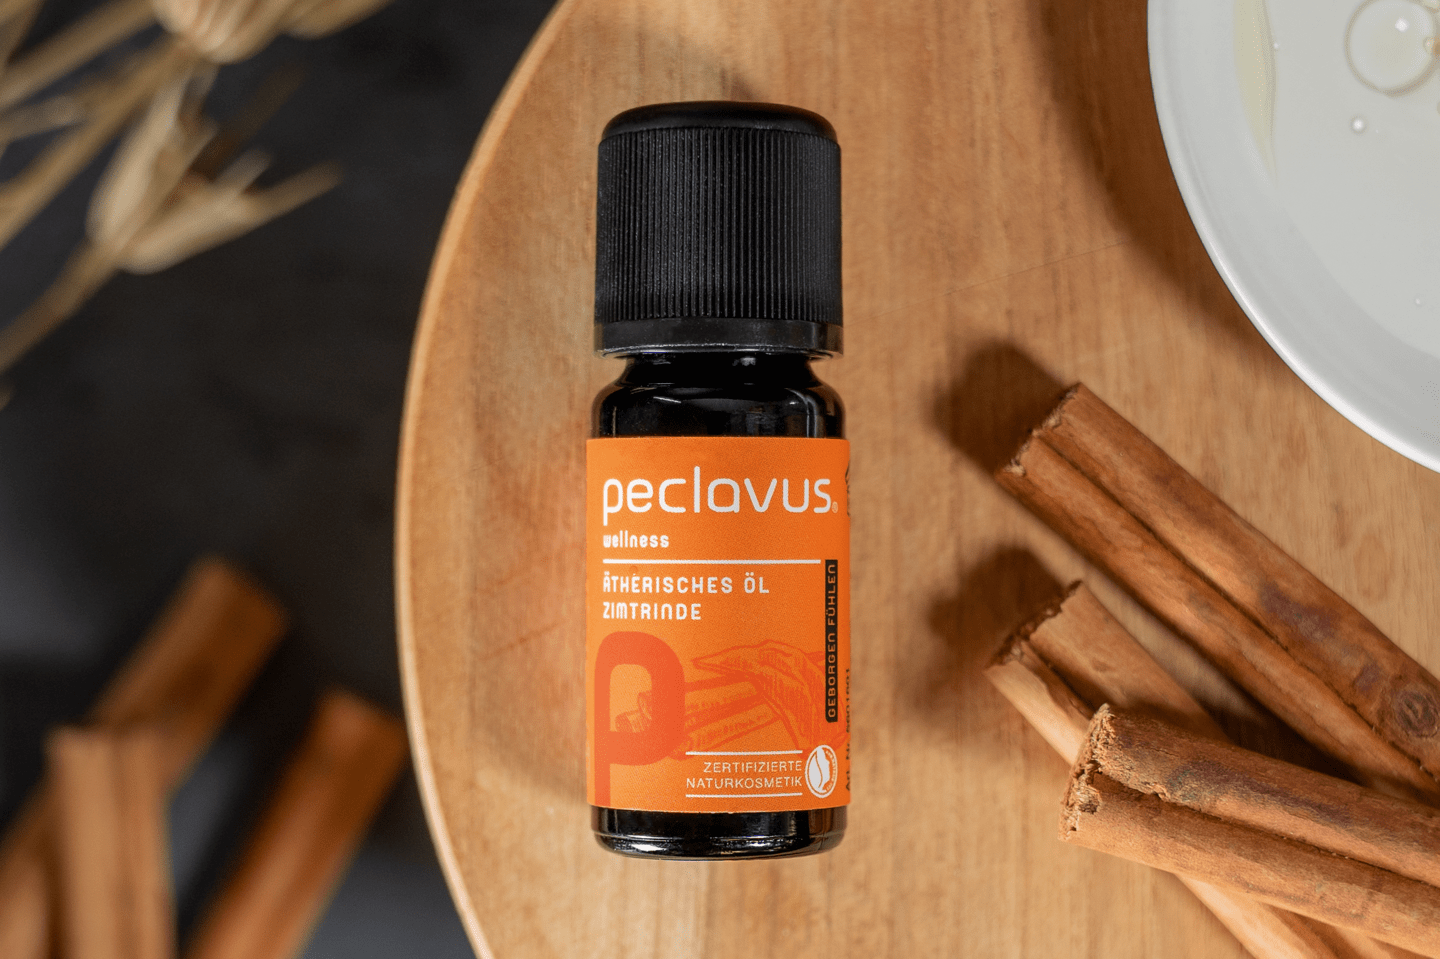 peclavus - Ätherisches Öl Zimtrinde, 10 ml